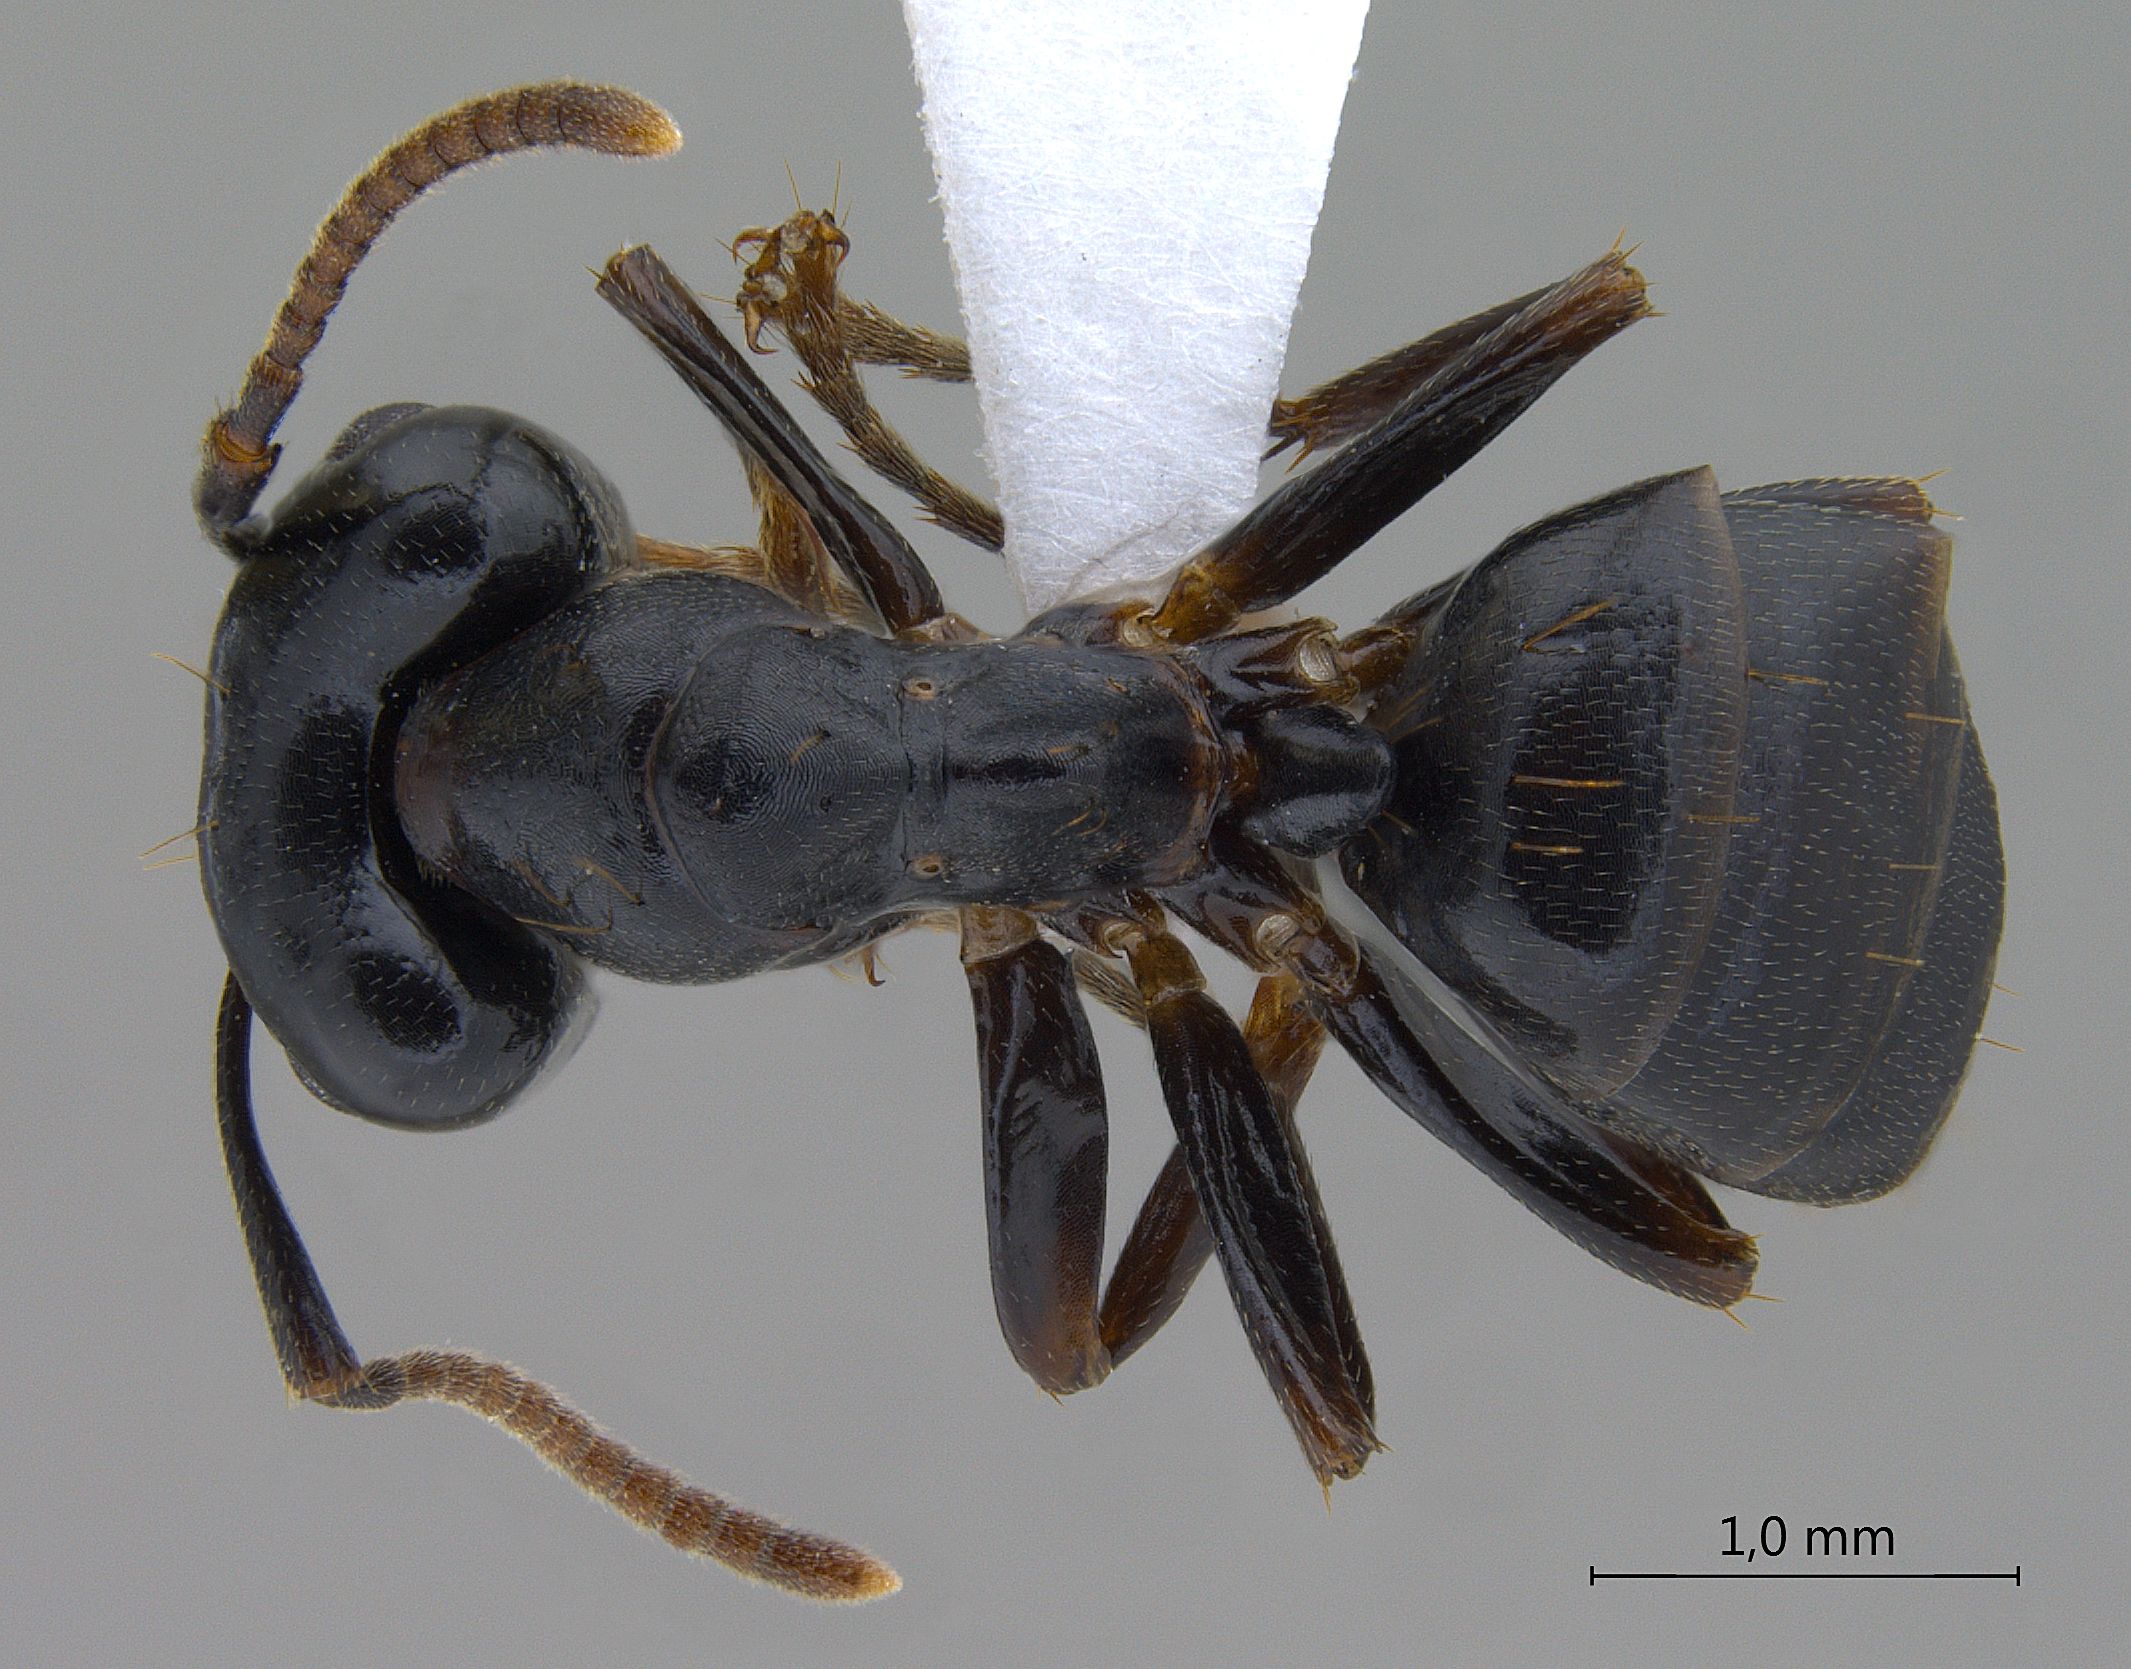 Camponotus korthalsiae dorsal